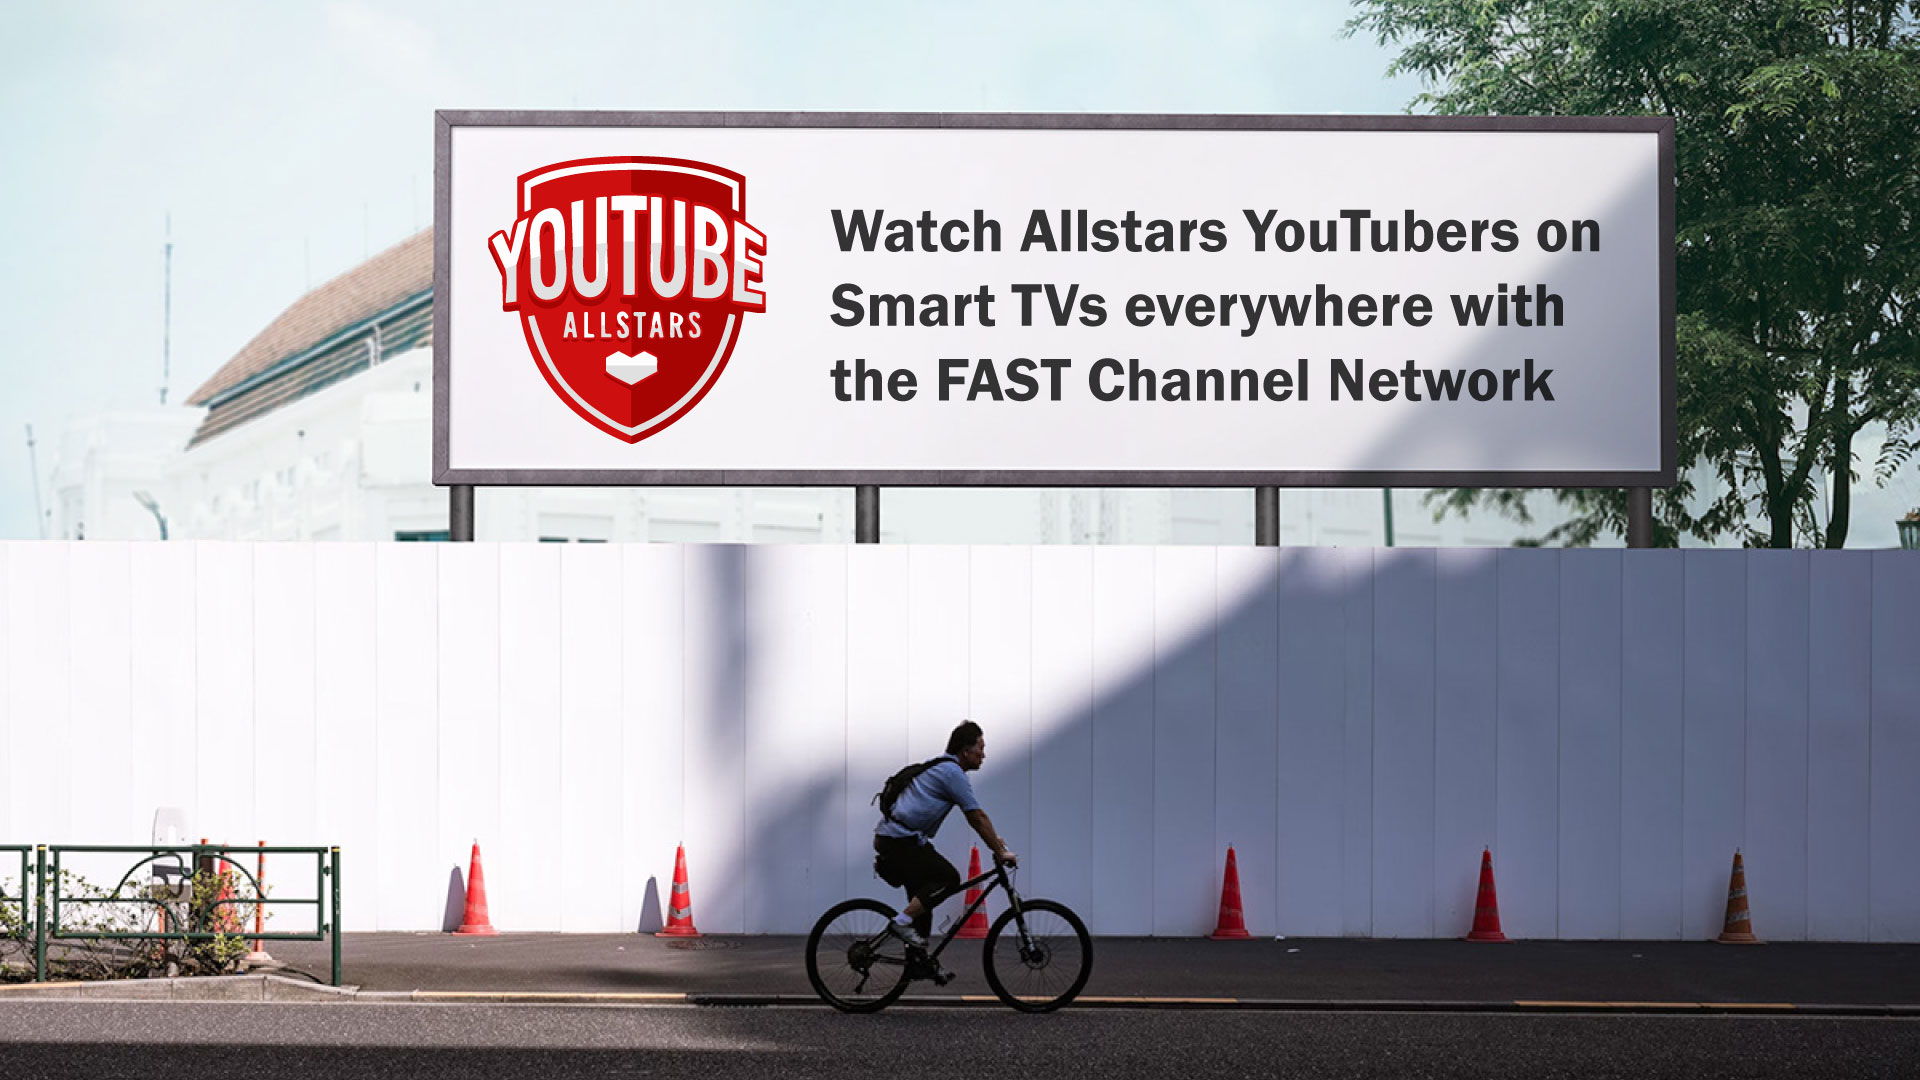 YouTube AllStars drive FAST distribution for amazing revenues